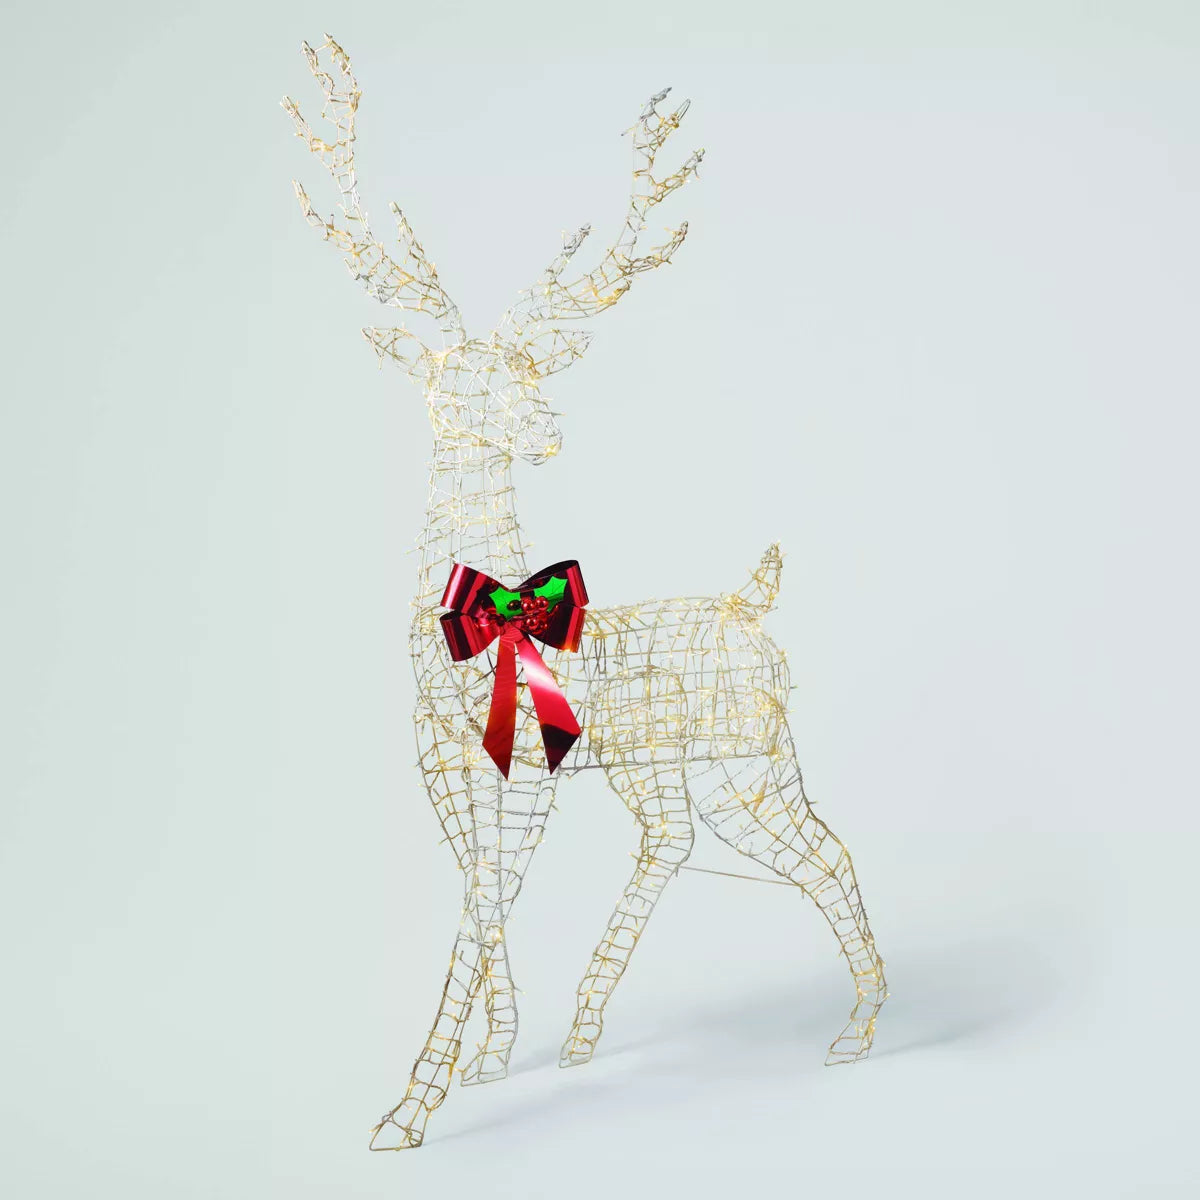 Philips 83" Standing Deer LED Novelty Sculpture Light Warm White